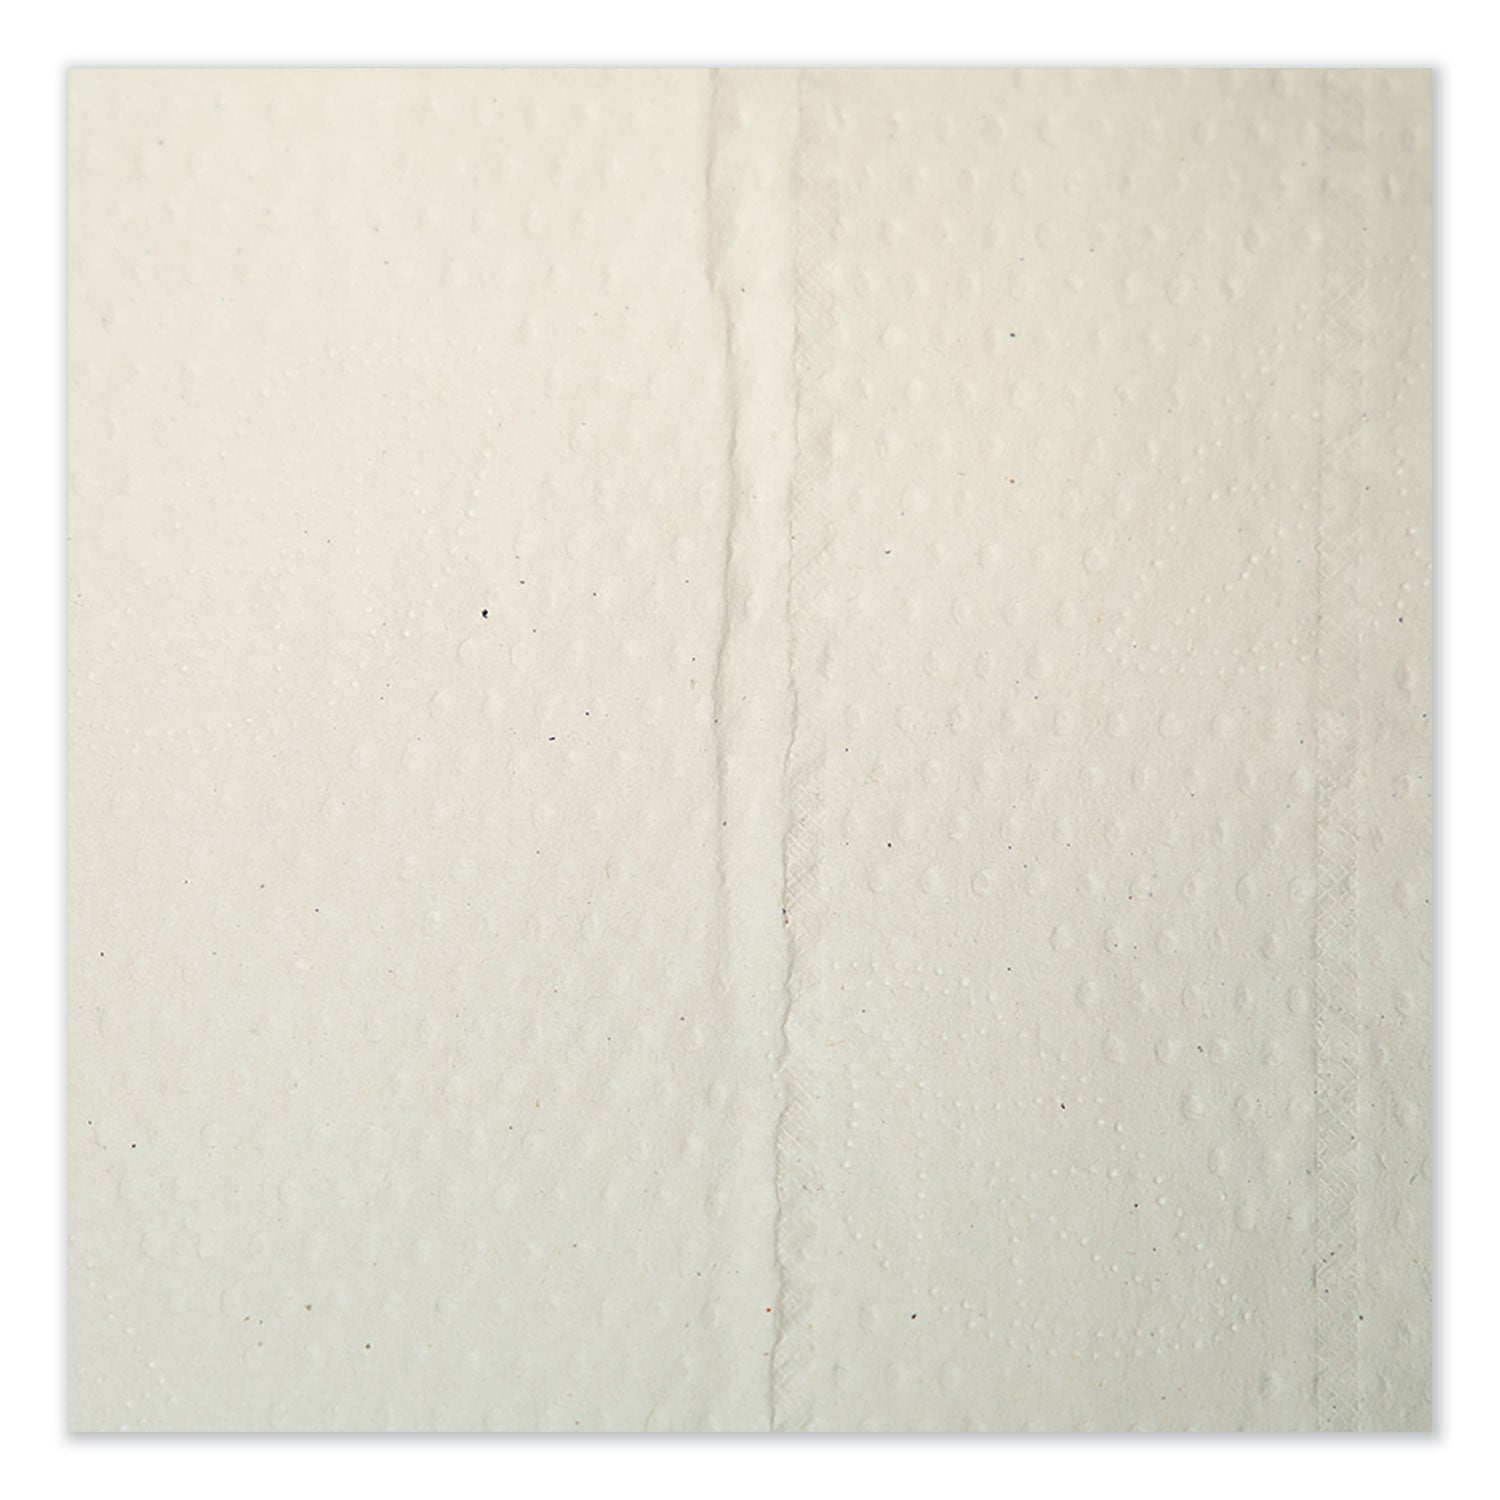 centerfeed-hand-towel-2-ply-76-x-118-white-500-roll-6-rolls-carton_trk120932 - 6